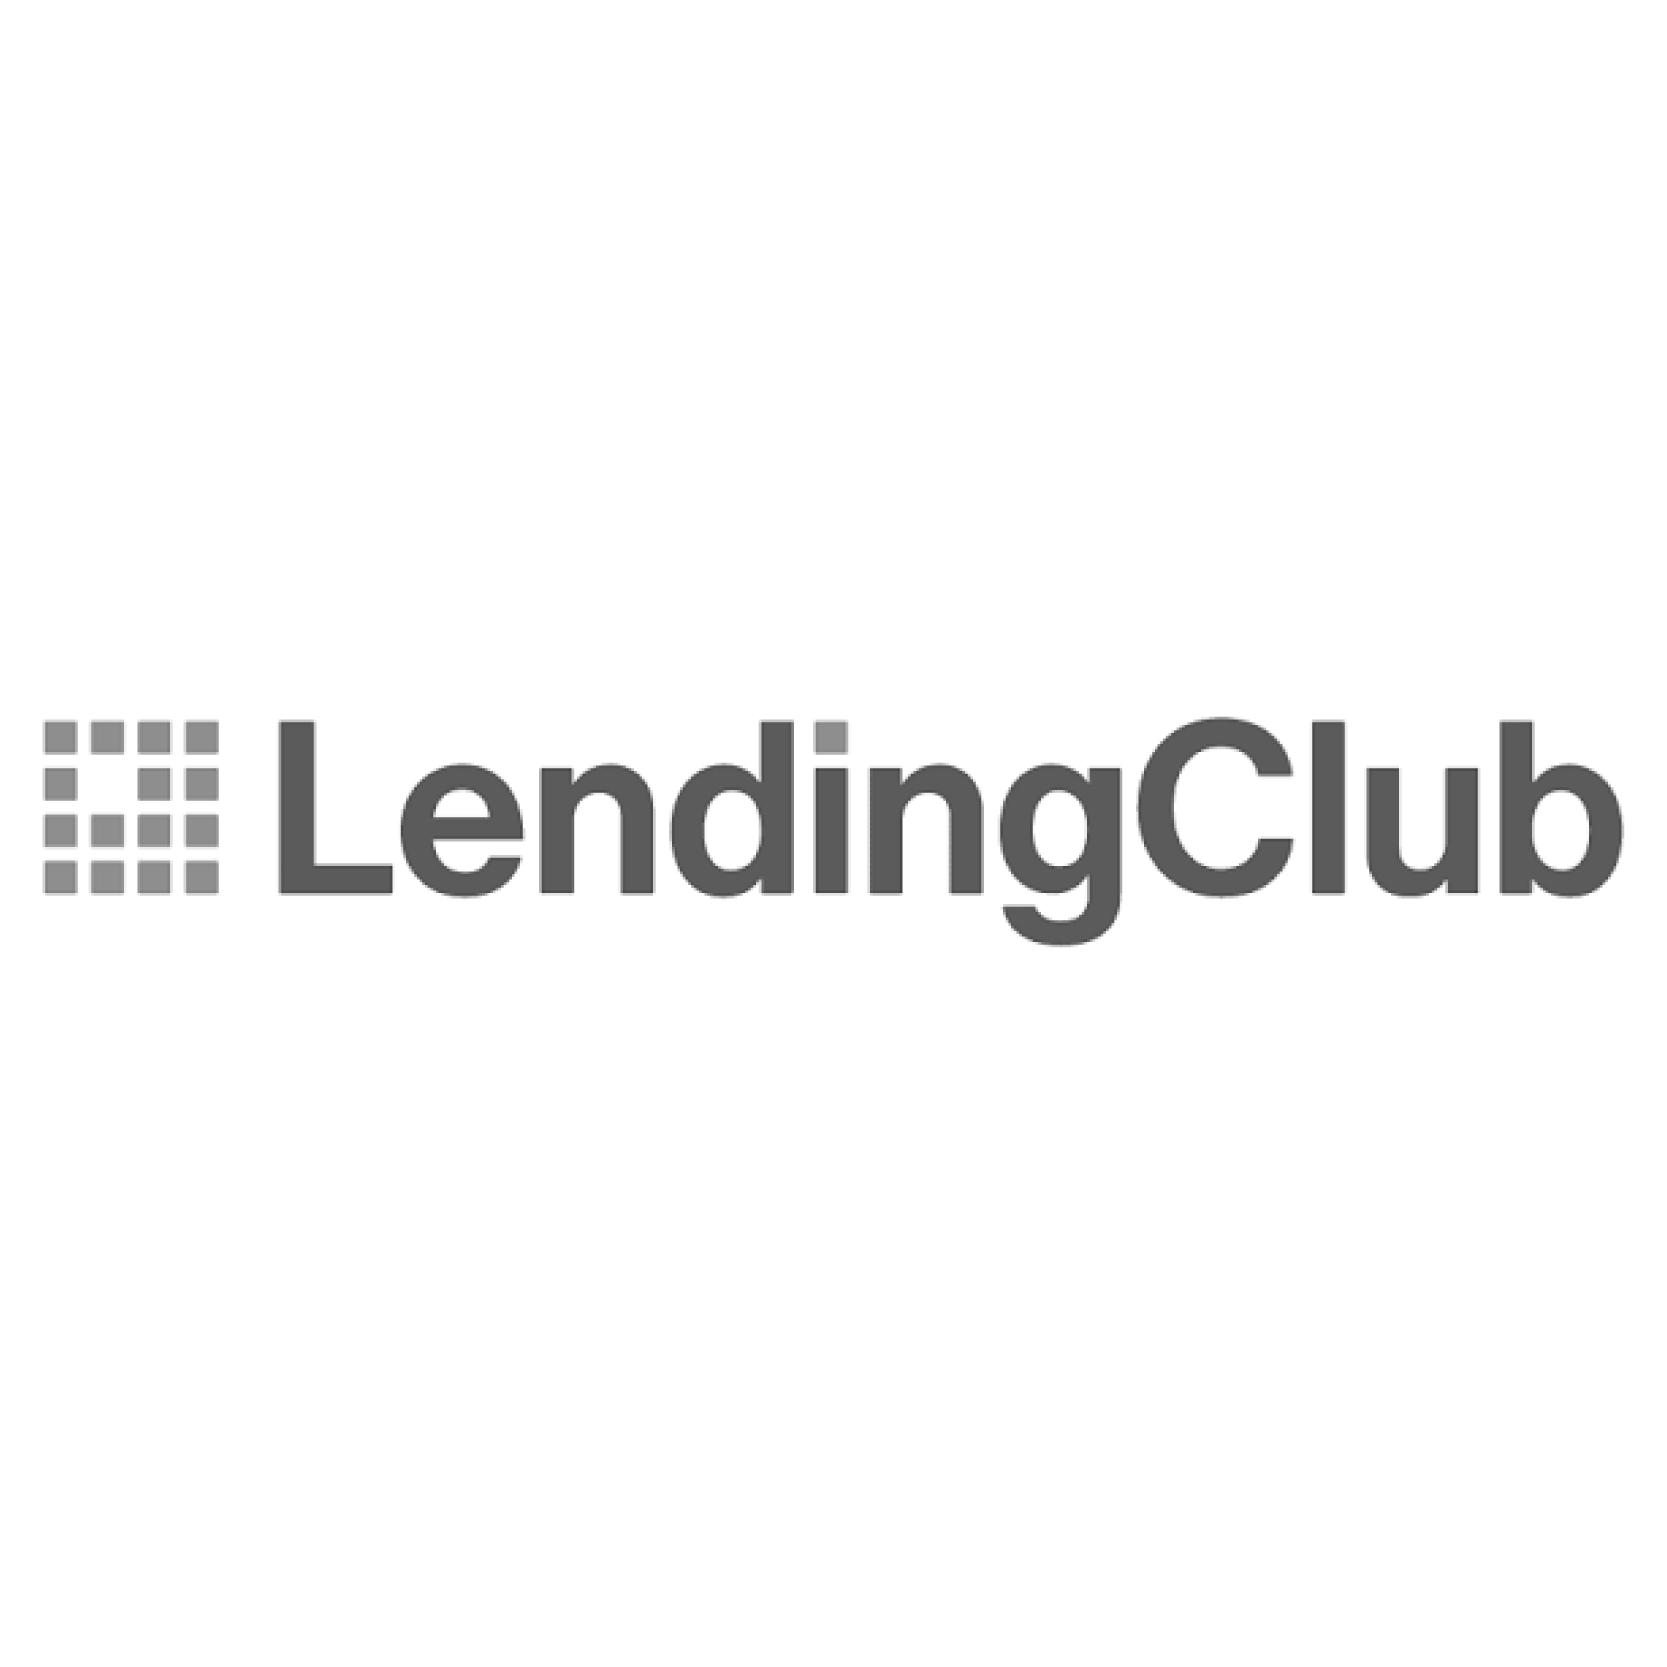 Lending Club-01